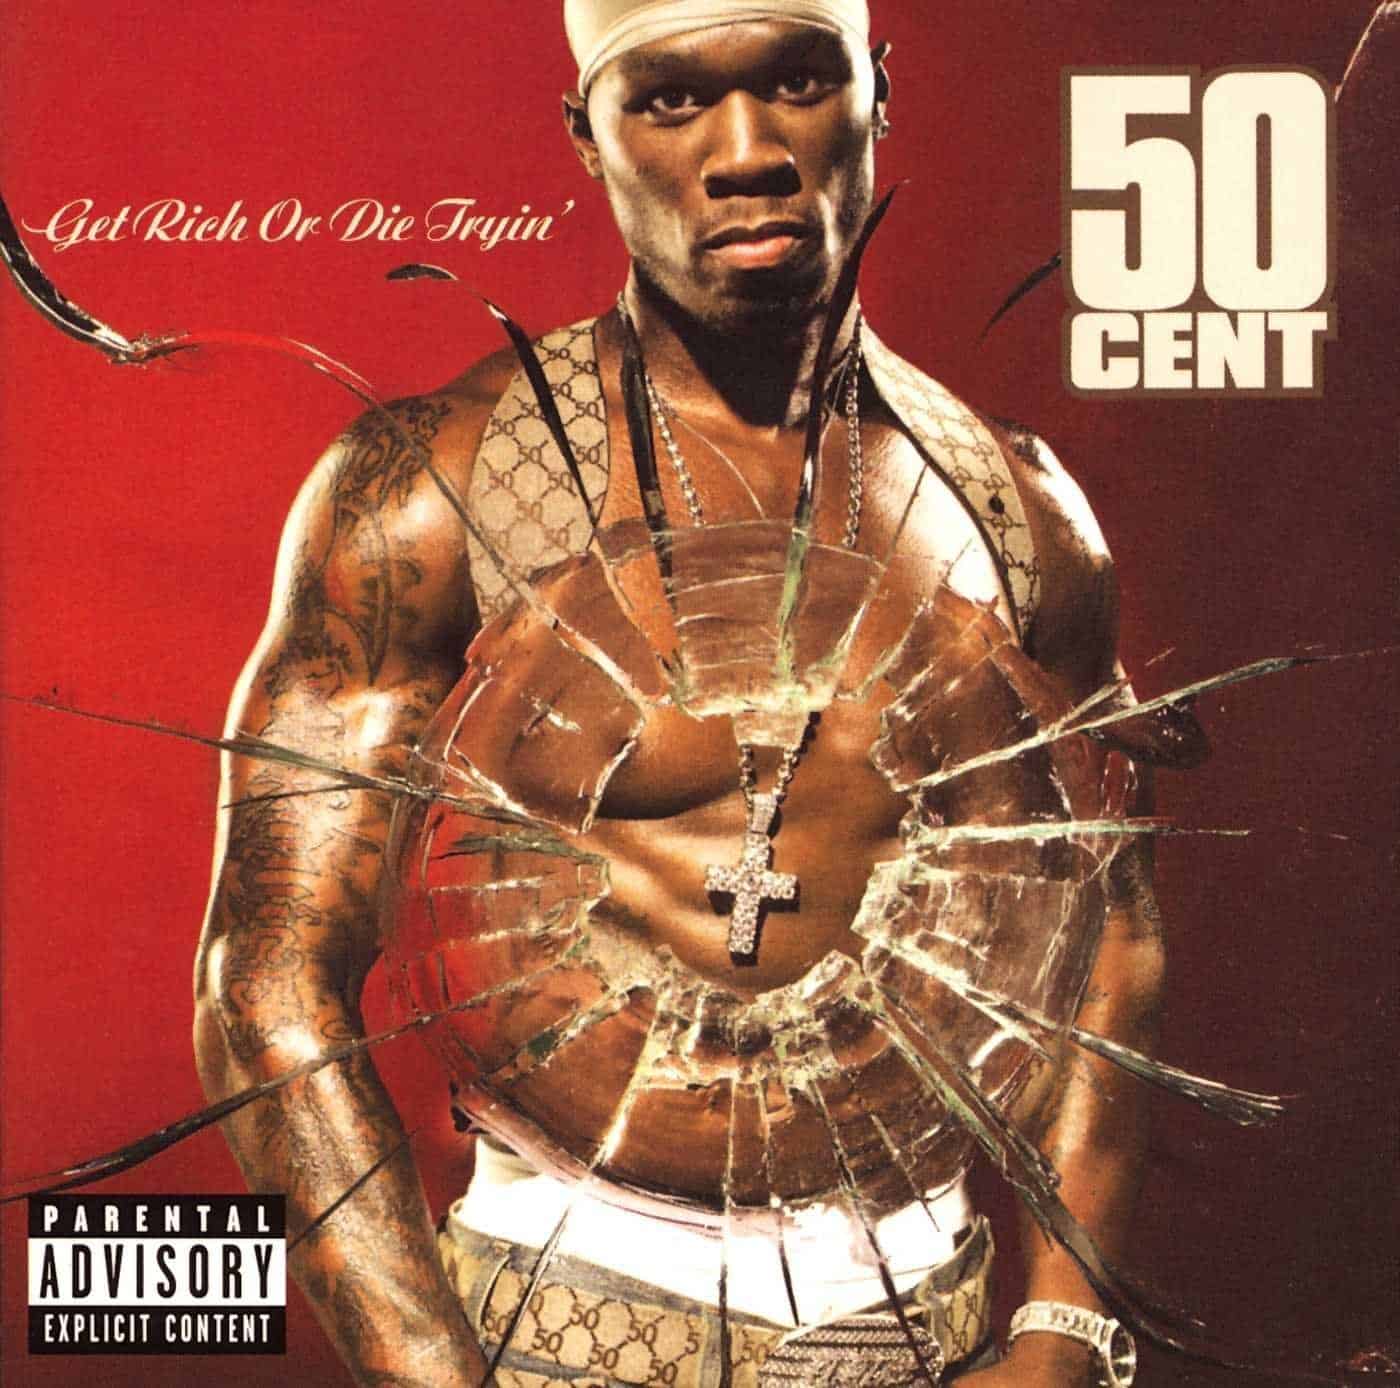 50 Cents Popular Trap Album "Get Rich Or Die Tryin"